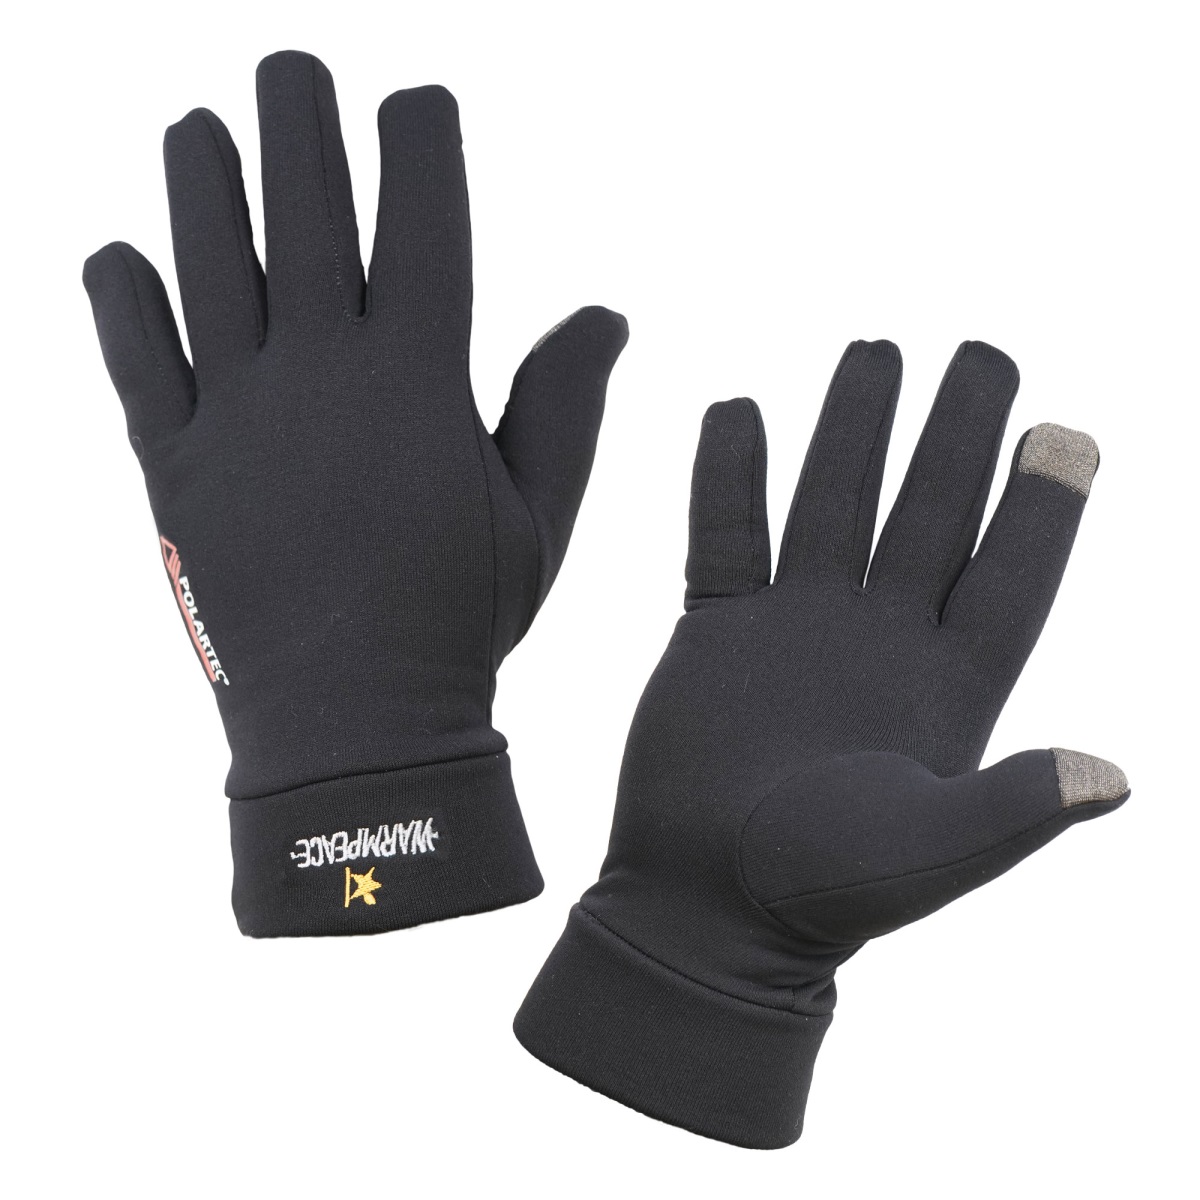 Rukavice Warmpeace Gloves Powerstretch touchscreen S/M black S/M